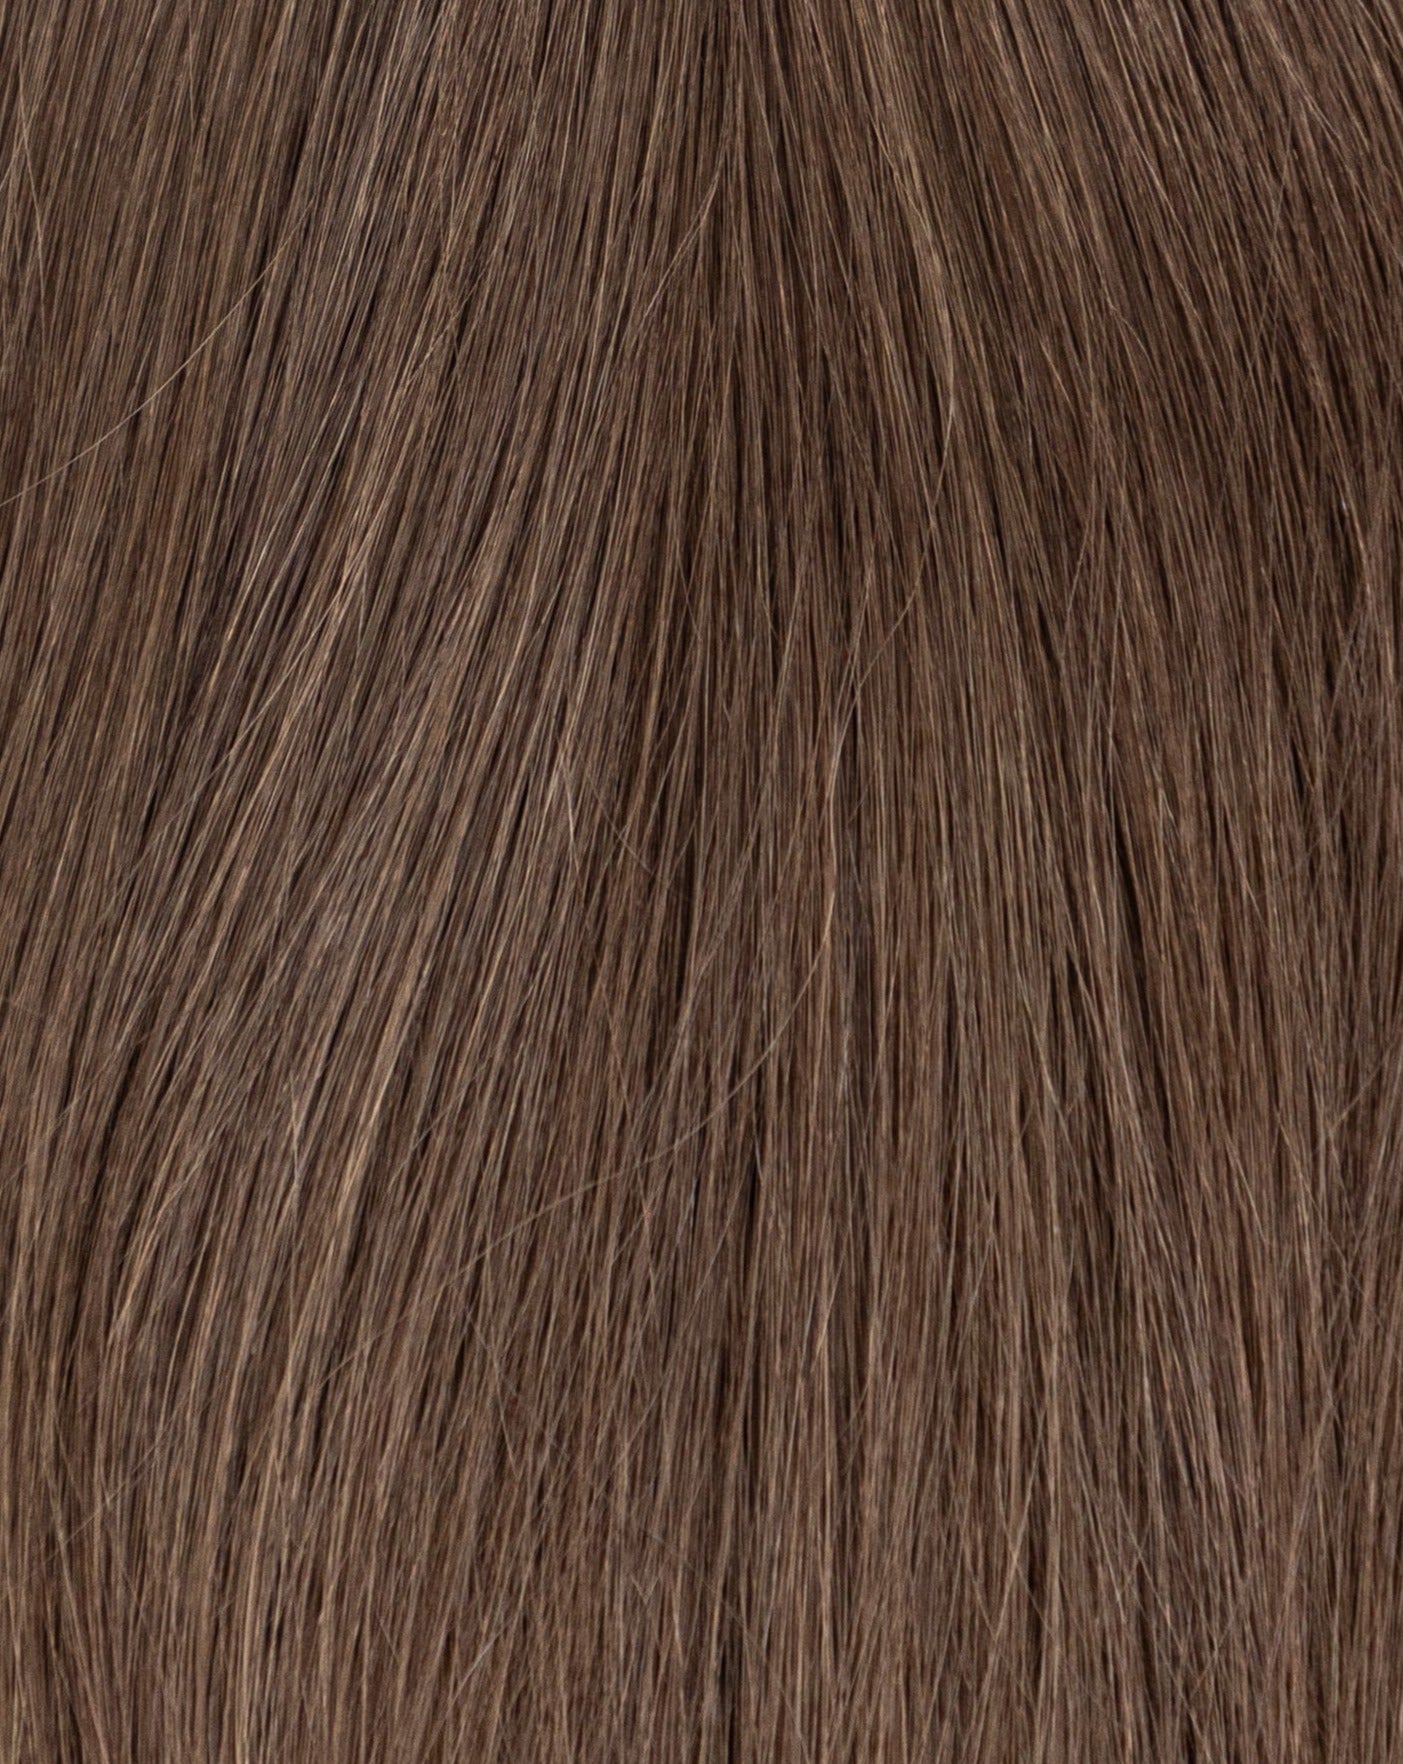 100% Remy european virgin hair extensions bulk 